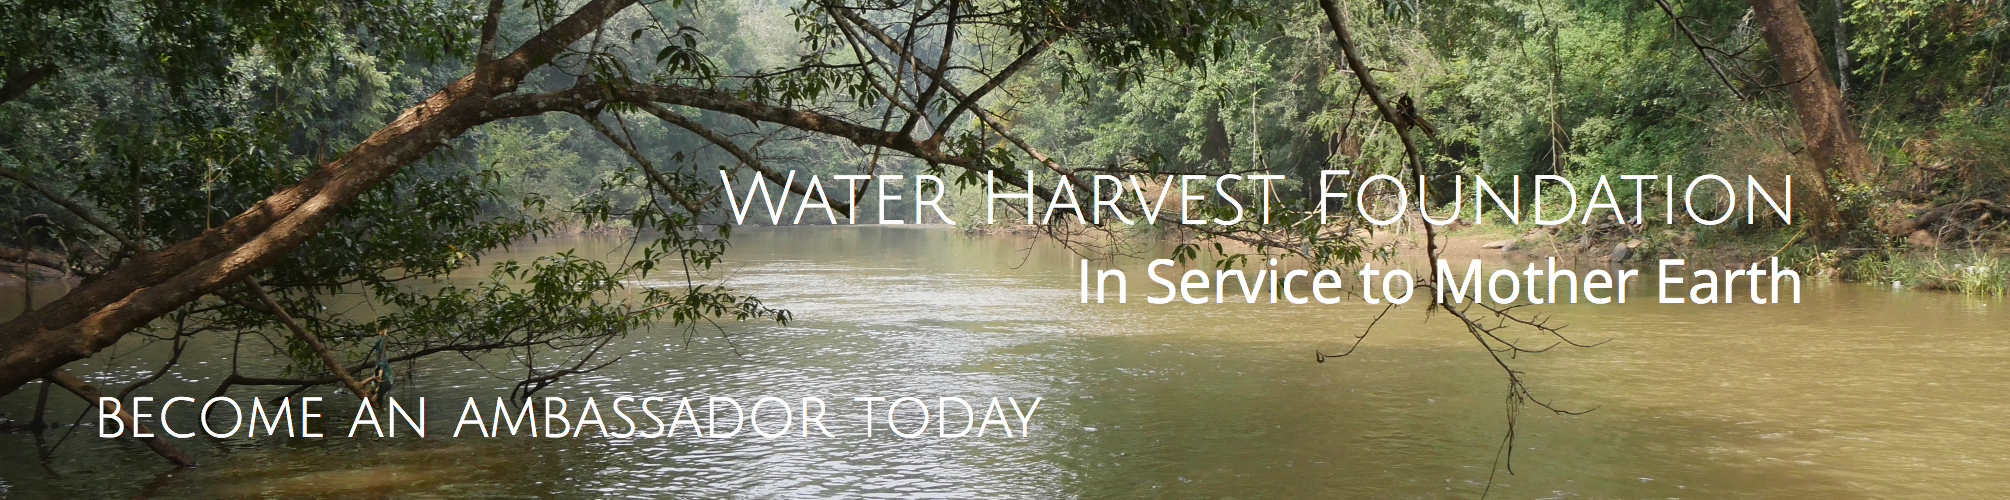 Water Harvest Foundation